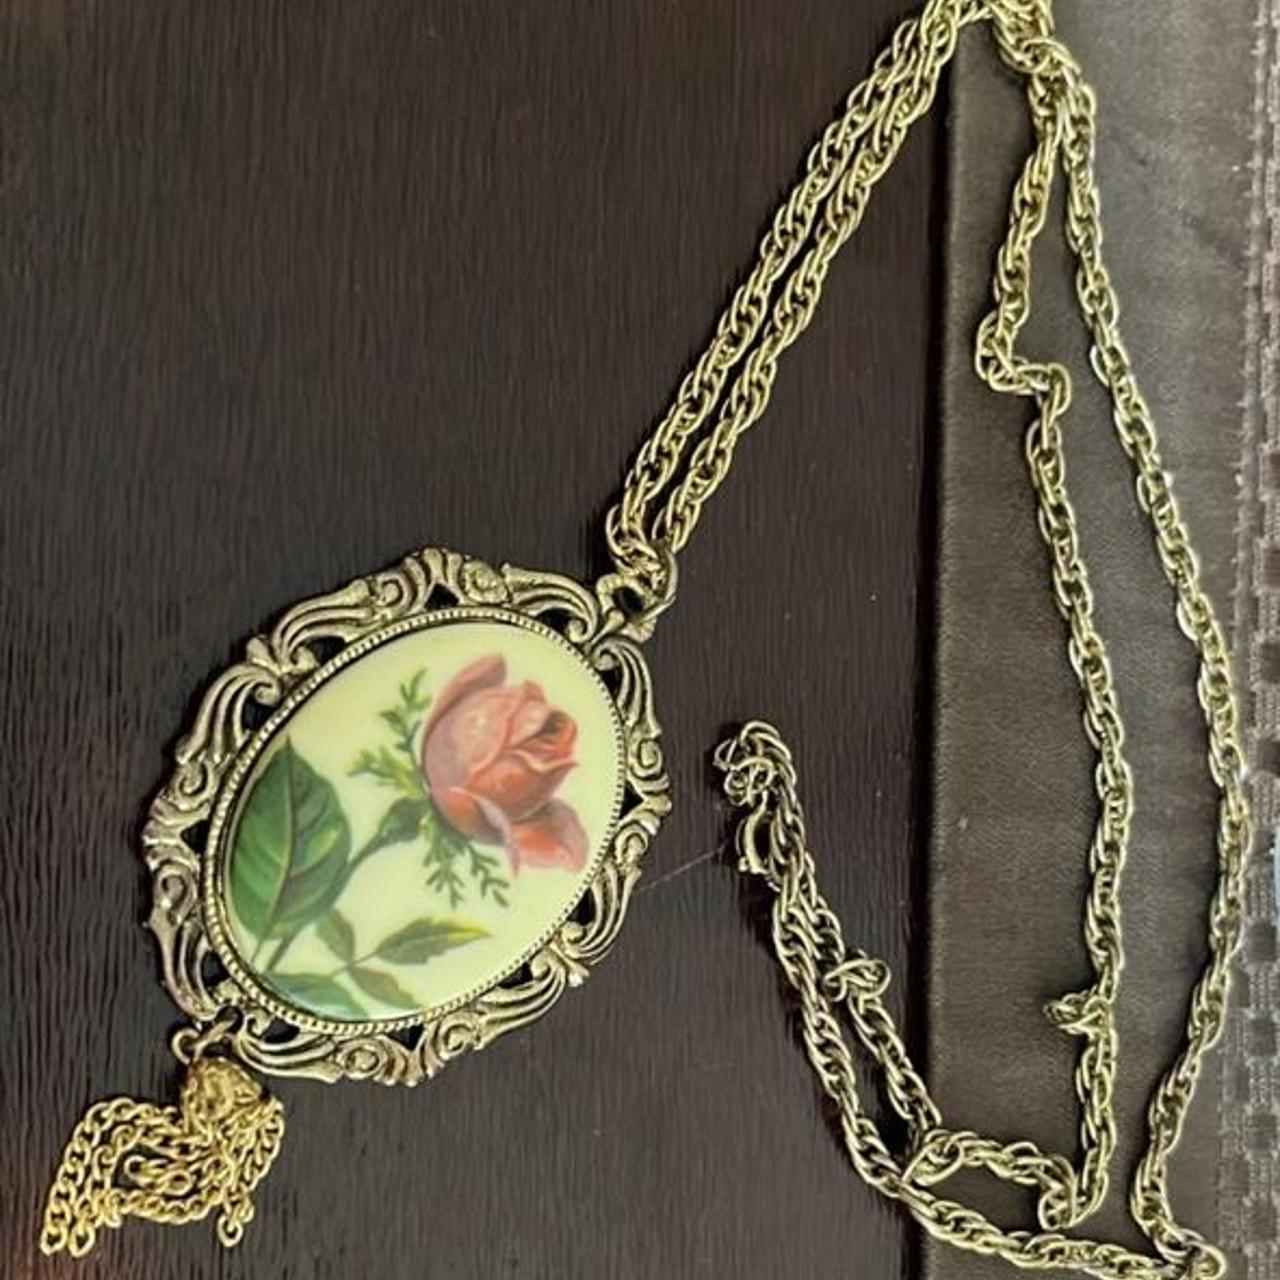 Product Image 1 - Beautiful Romantic Rose Cameo
Tassel Necklace-

-Acrylic